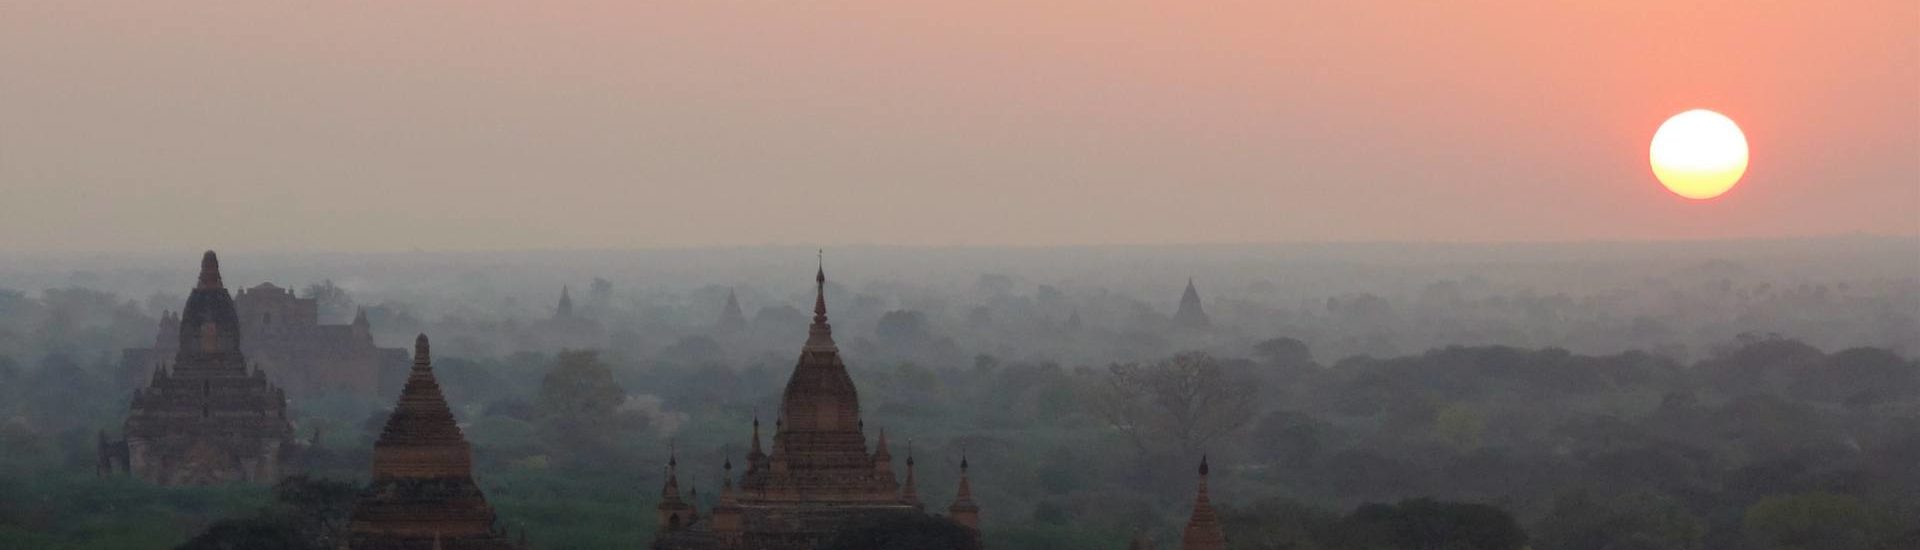 Wschód słońca w Bagan